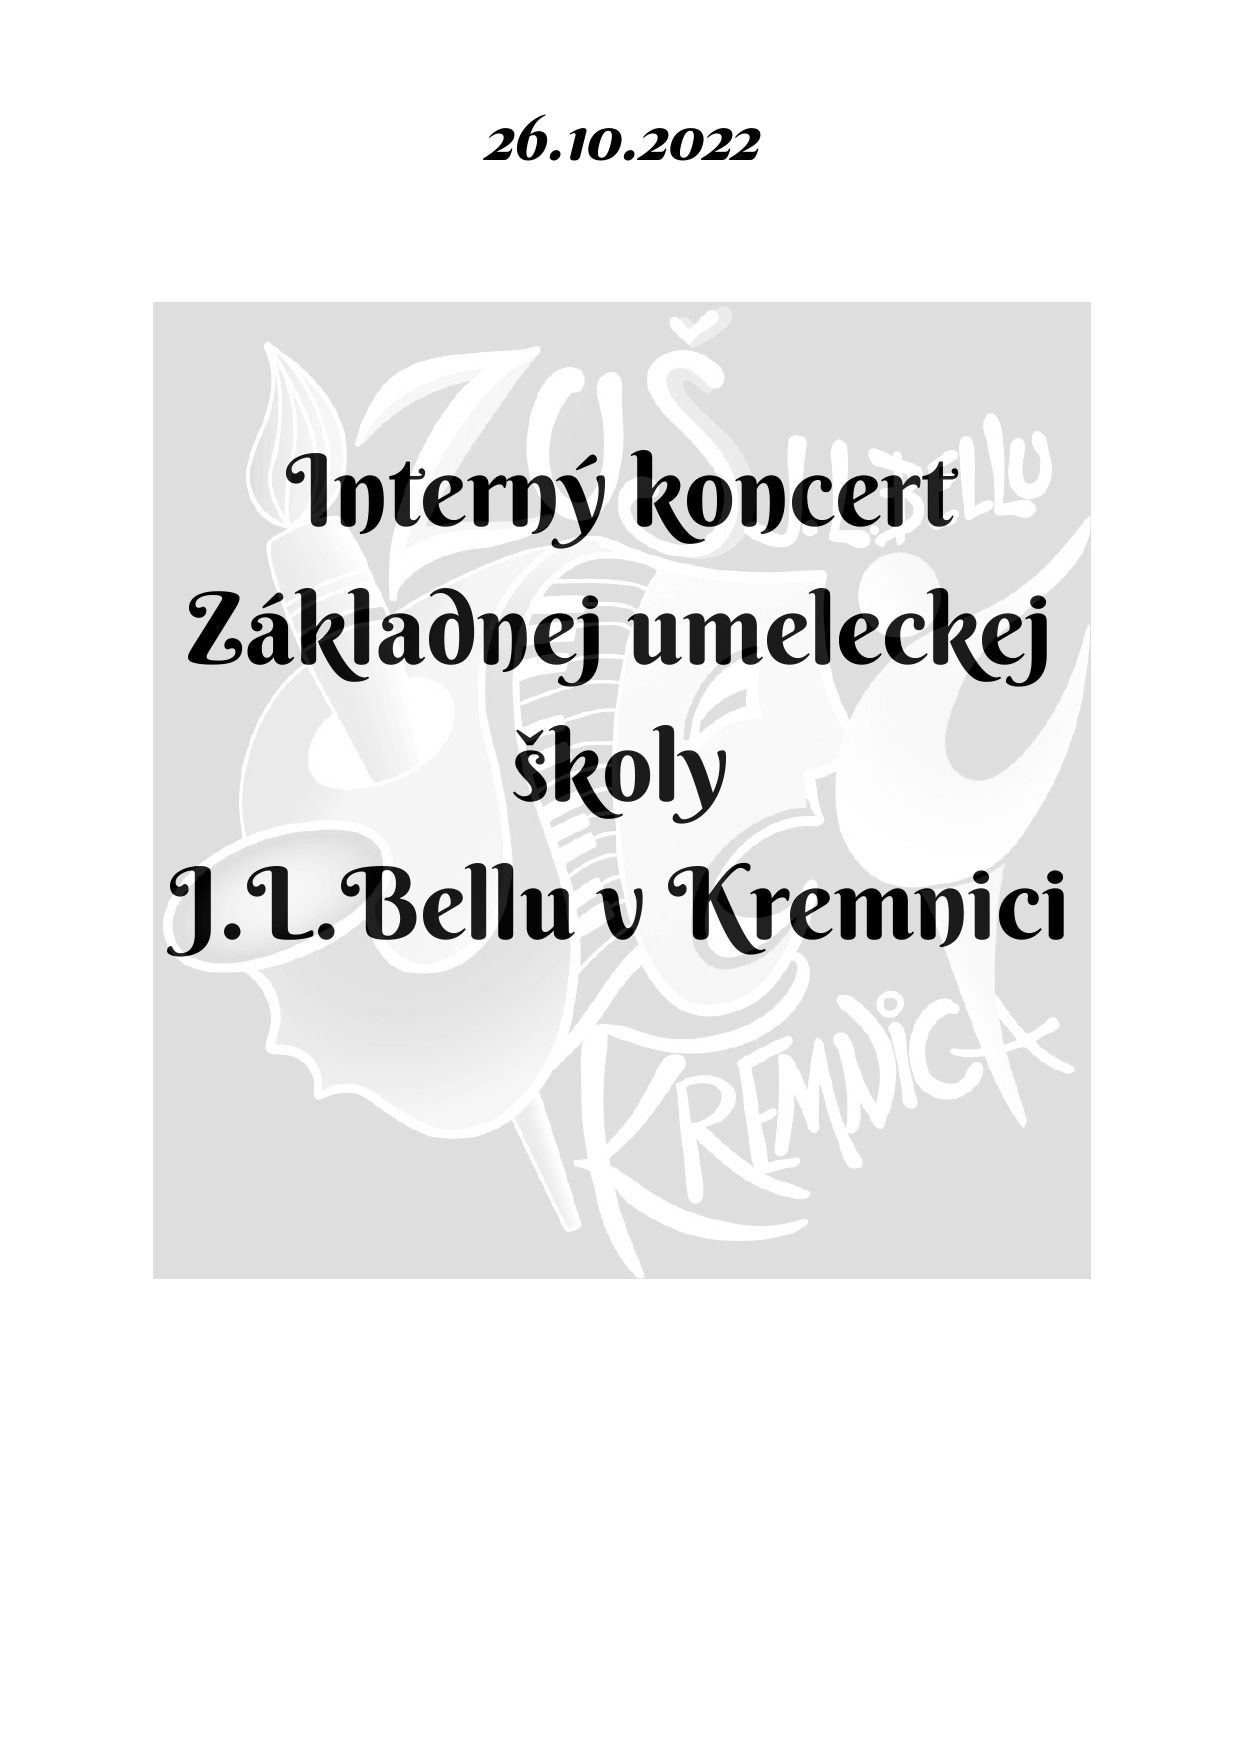 Pozvánka na online interný koncert dnes 26.10. o 17:00 - Obrázok 1